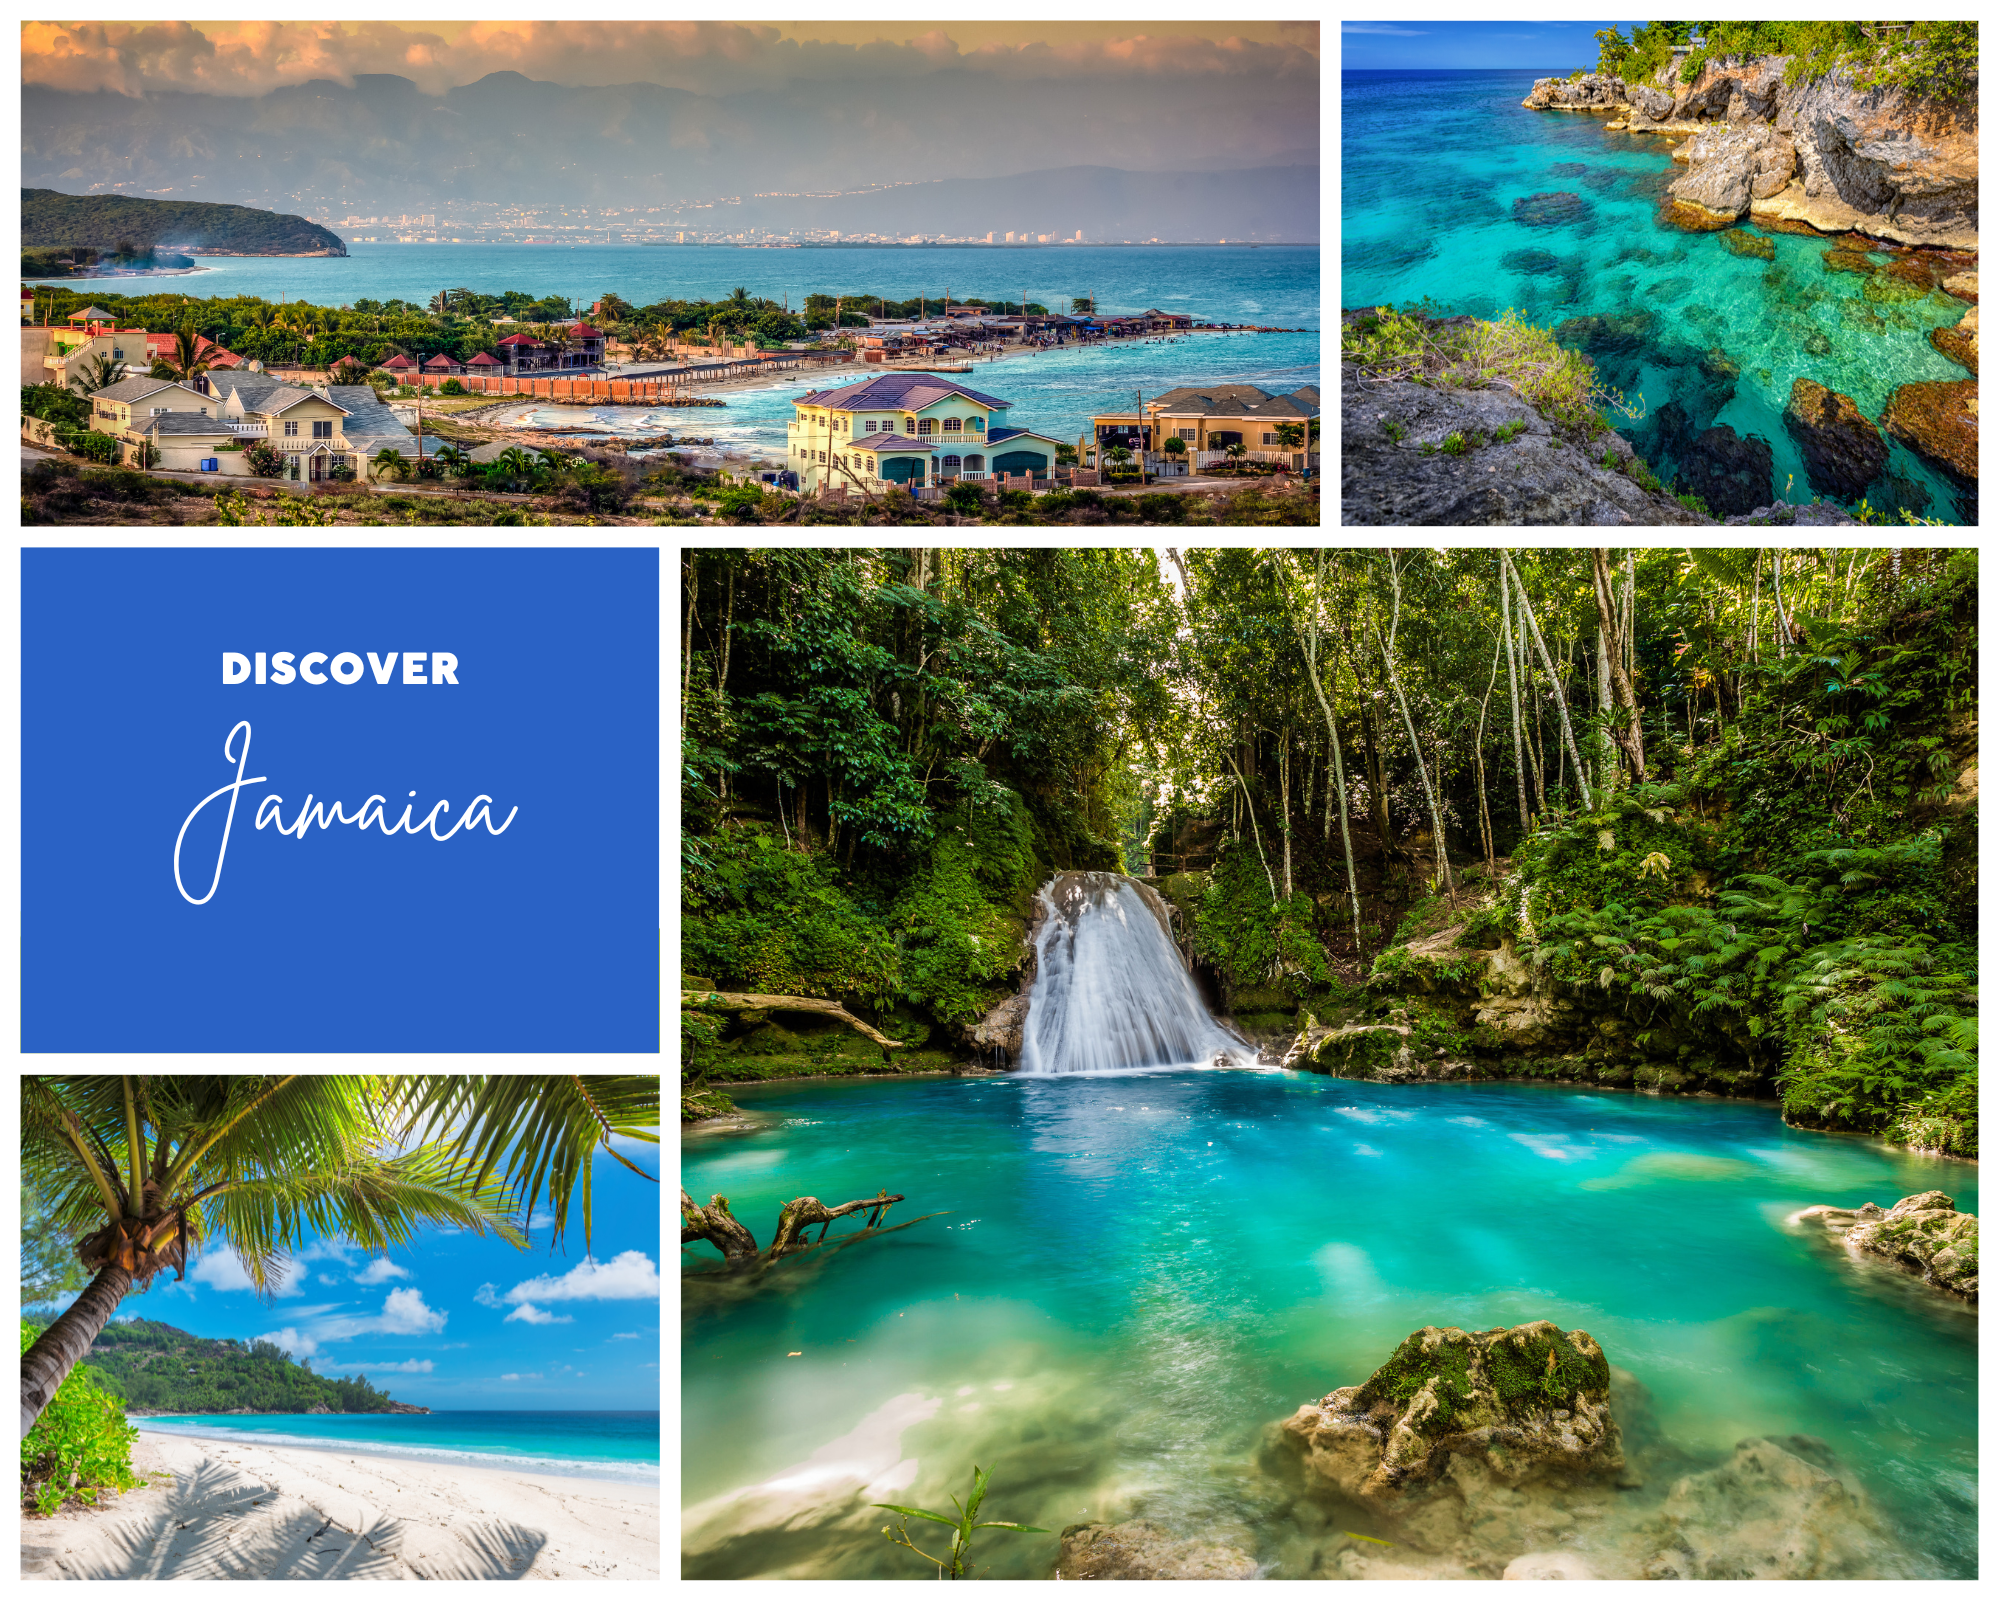 Jamaica Western Caribbean Islands